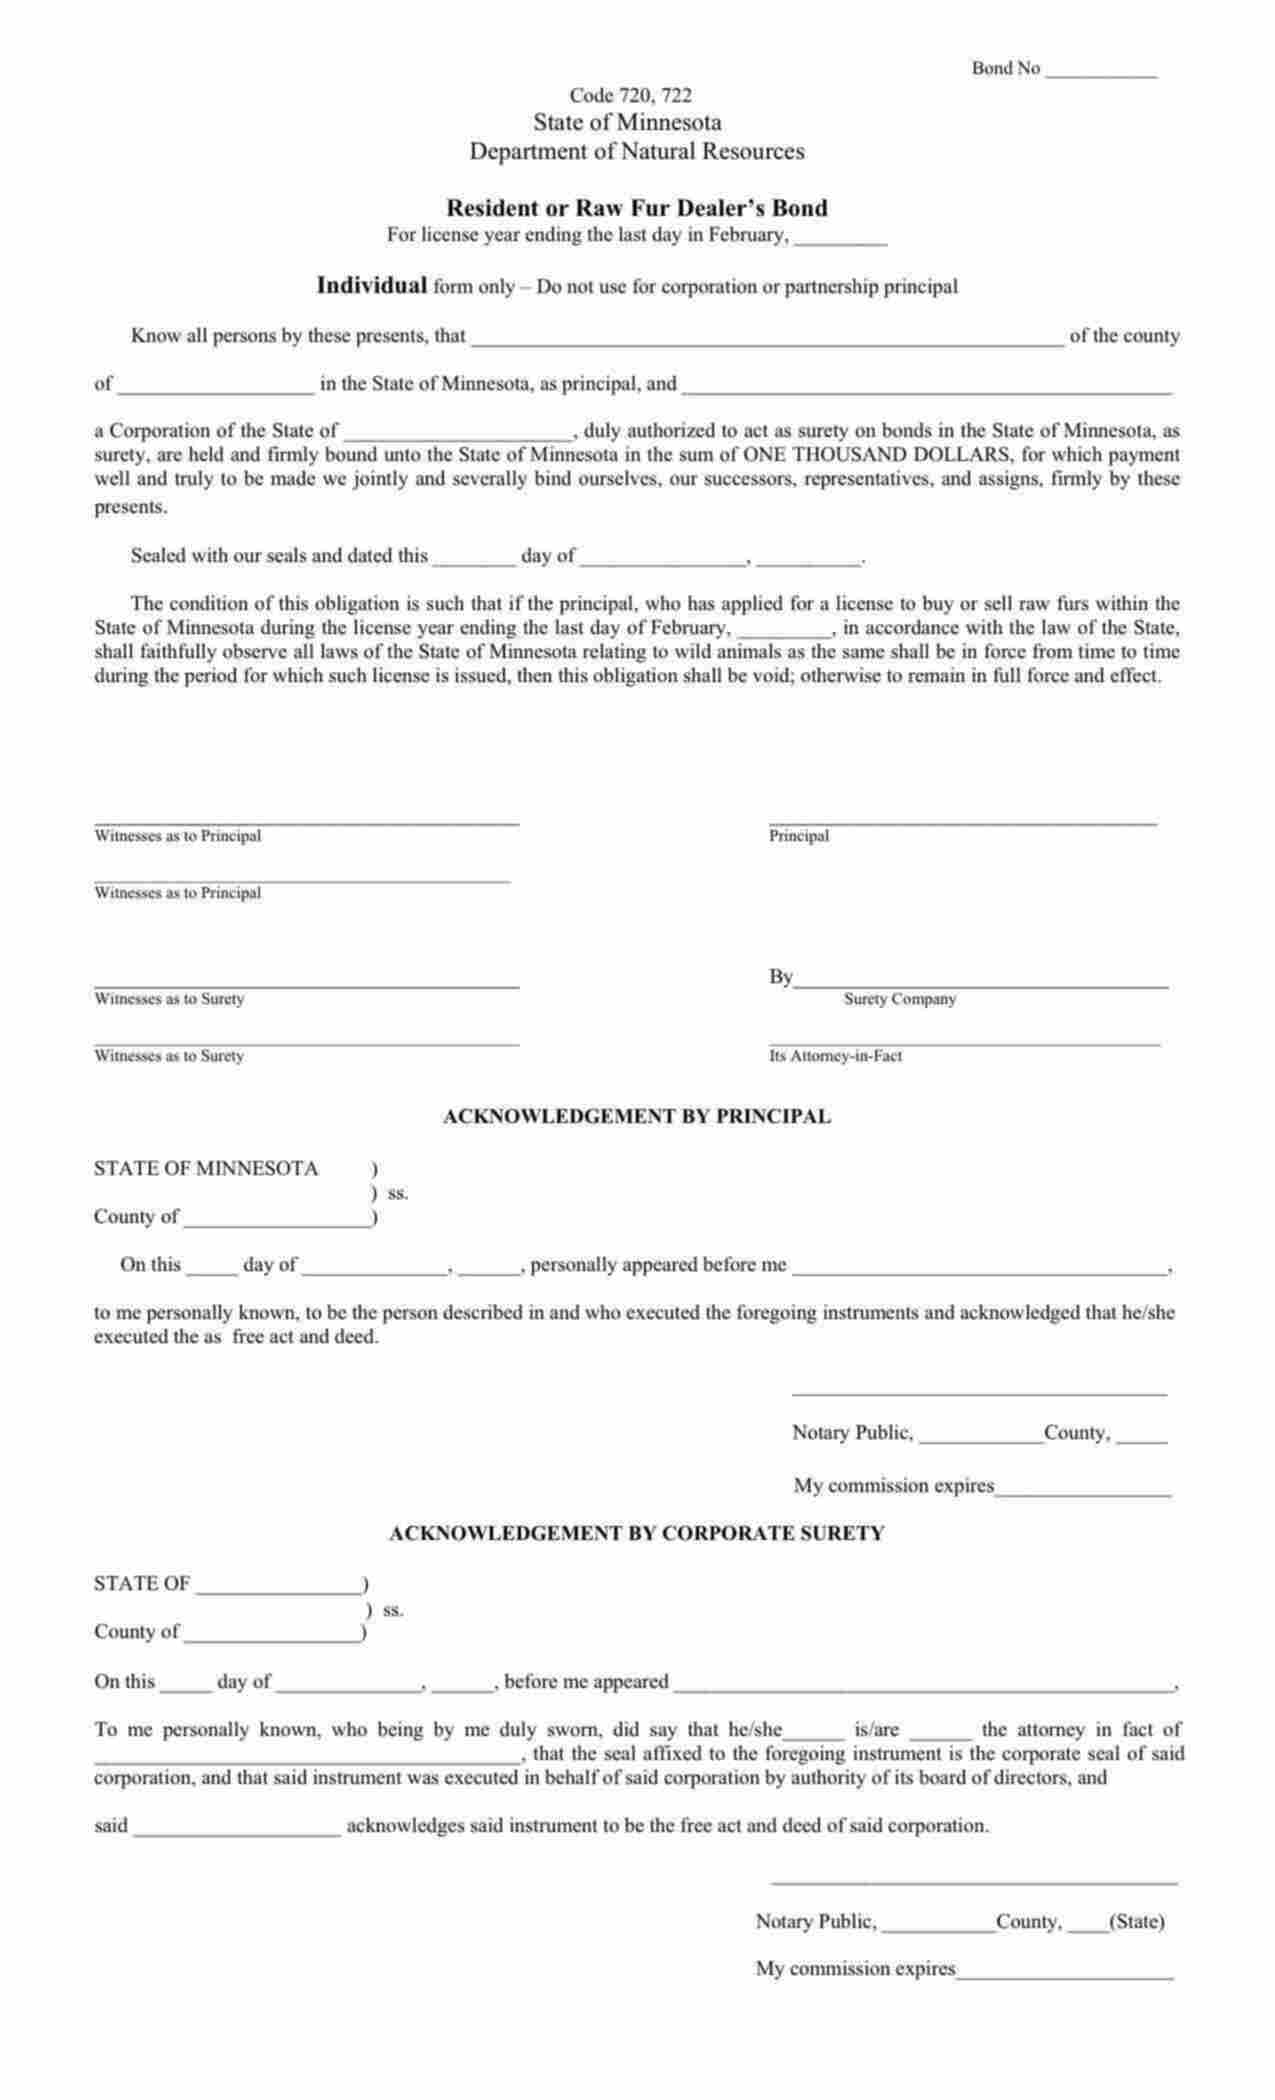 Minnesota Resident or Non-Resident Fur Dealer (Individual) Bond Form